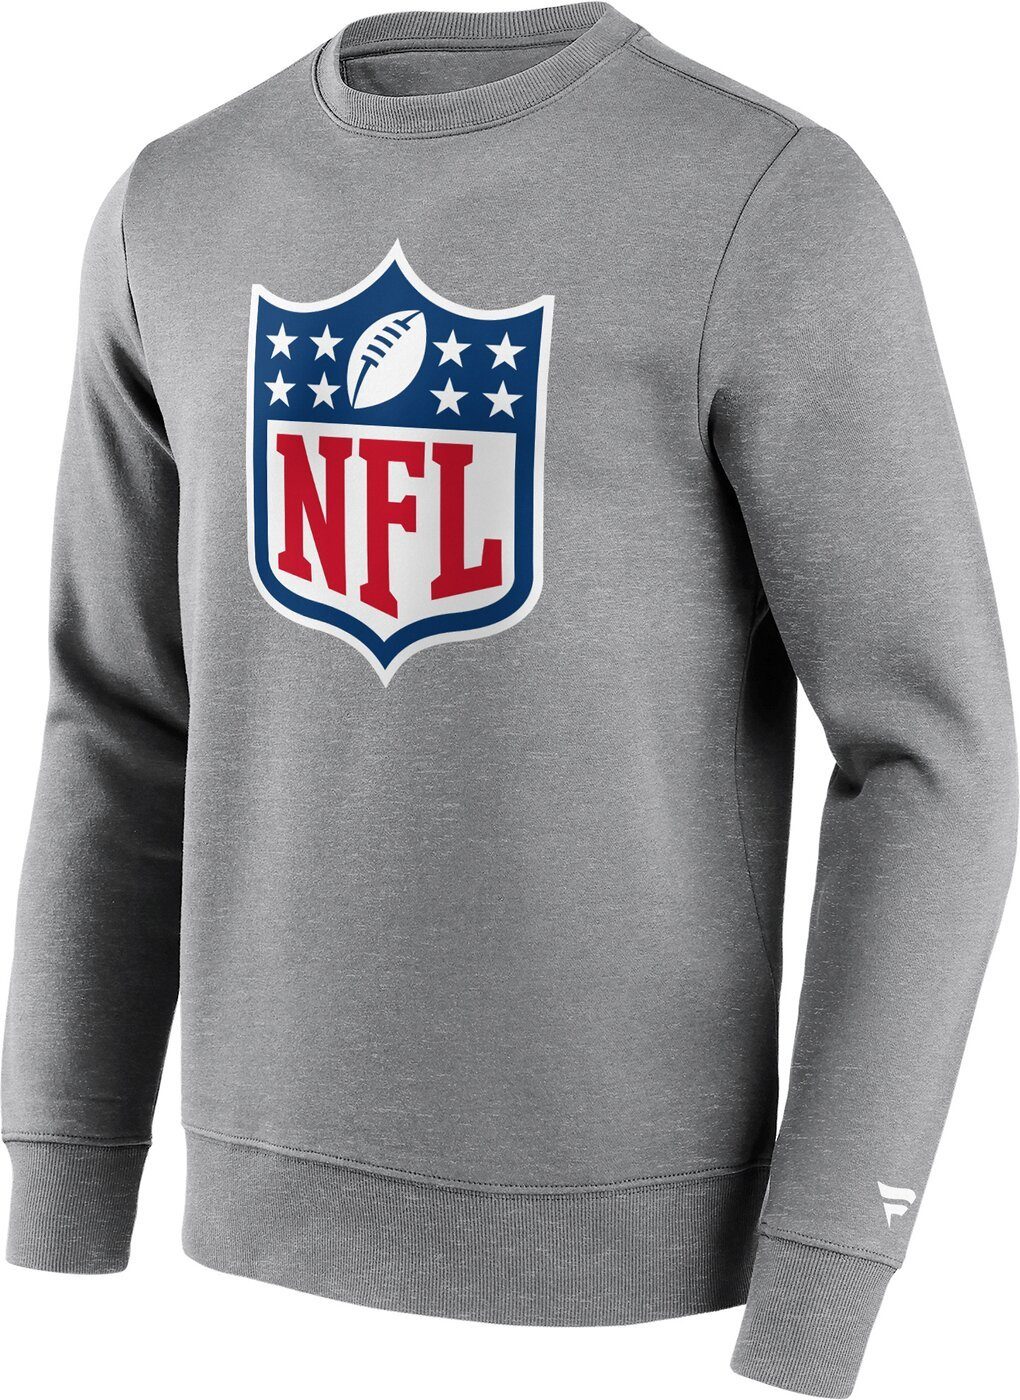 Sweatshirt NFL PRIMARY LOGO CREW SWEATSHIRT NFL PRIMARY GRAPHIC GRAU